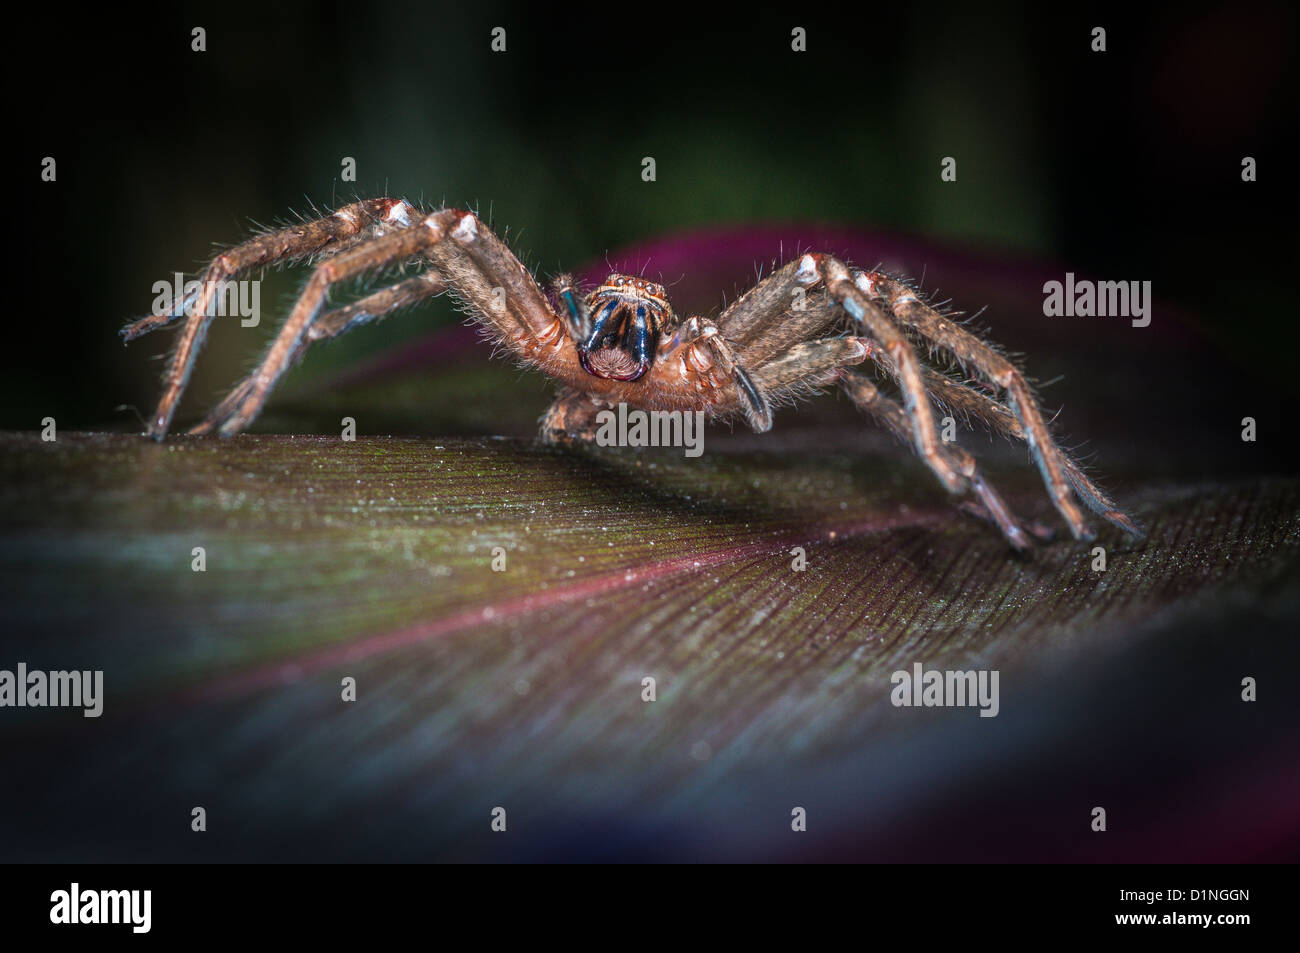 Insignia o escudo araña Huntsman, Queensland, Australia Foto de stock